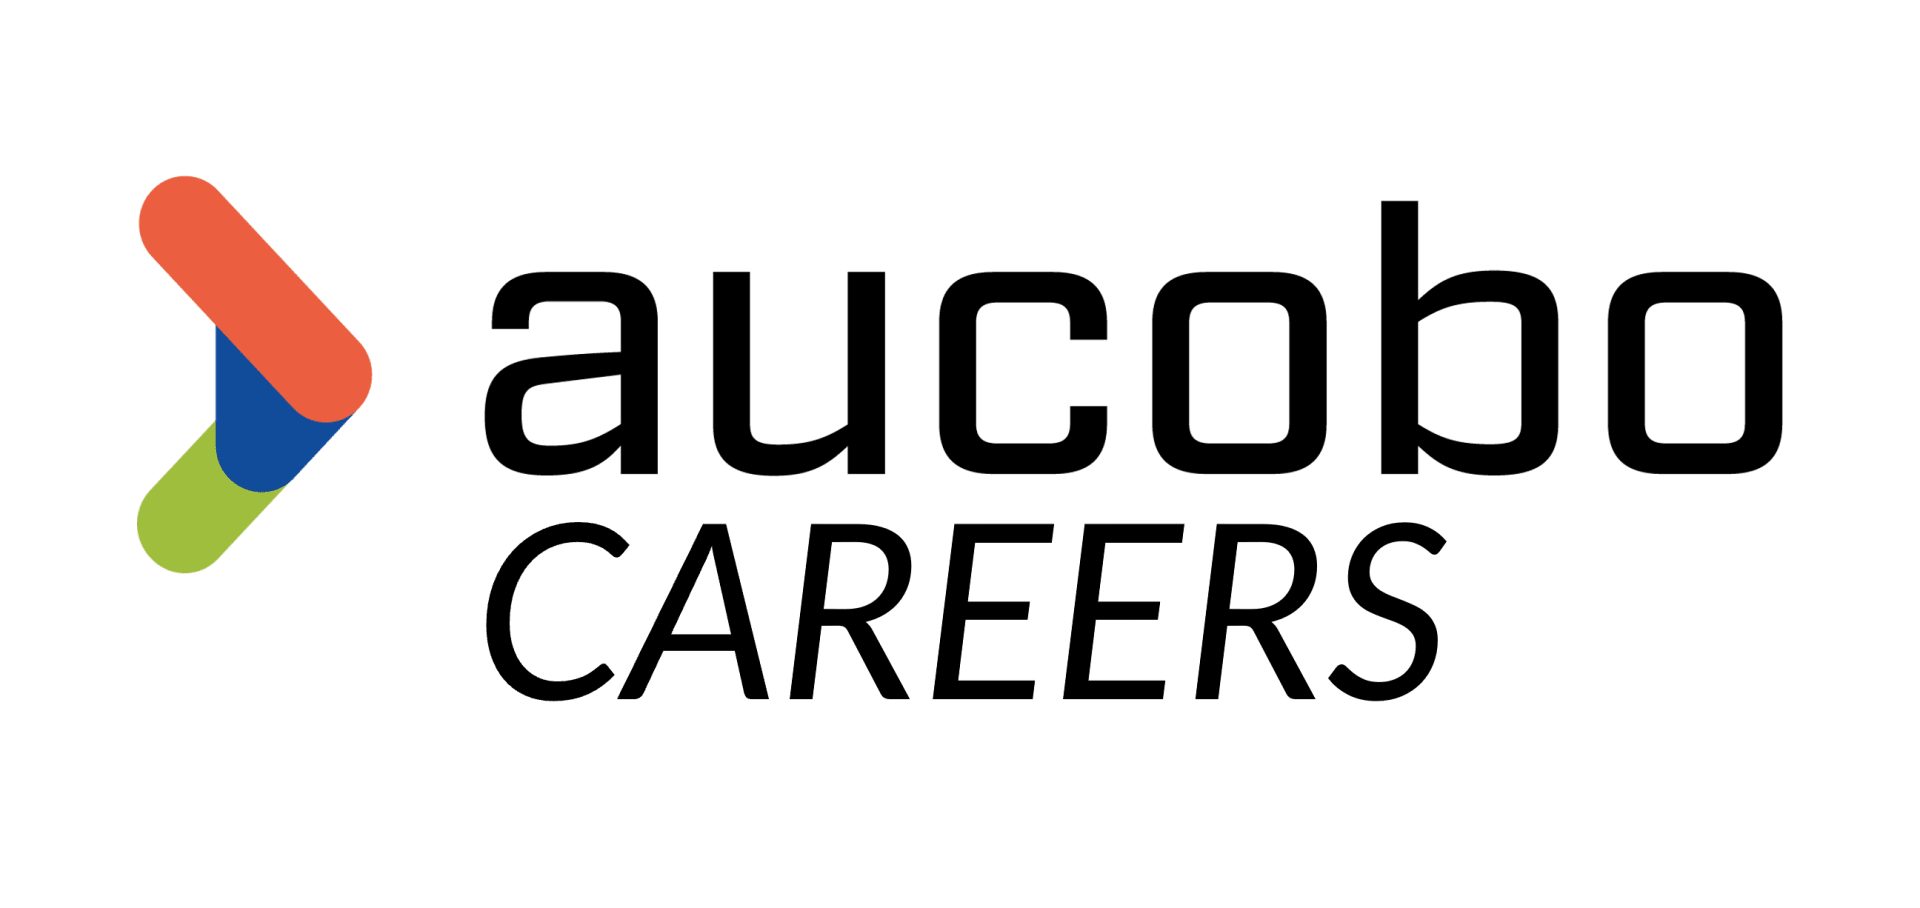 aucobo careers logo